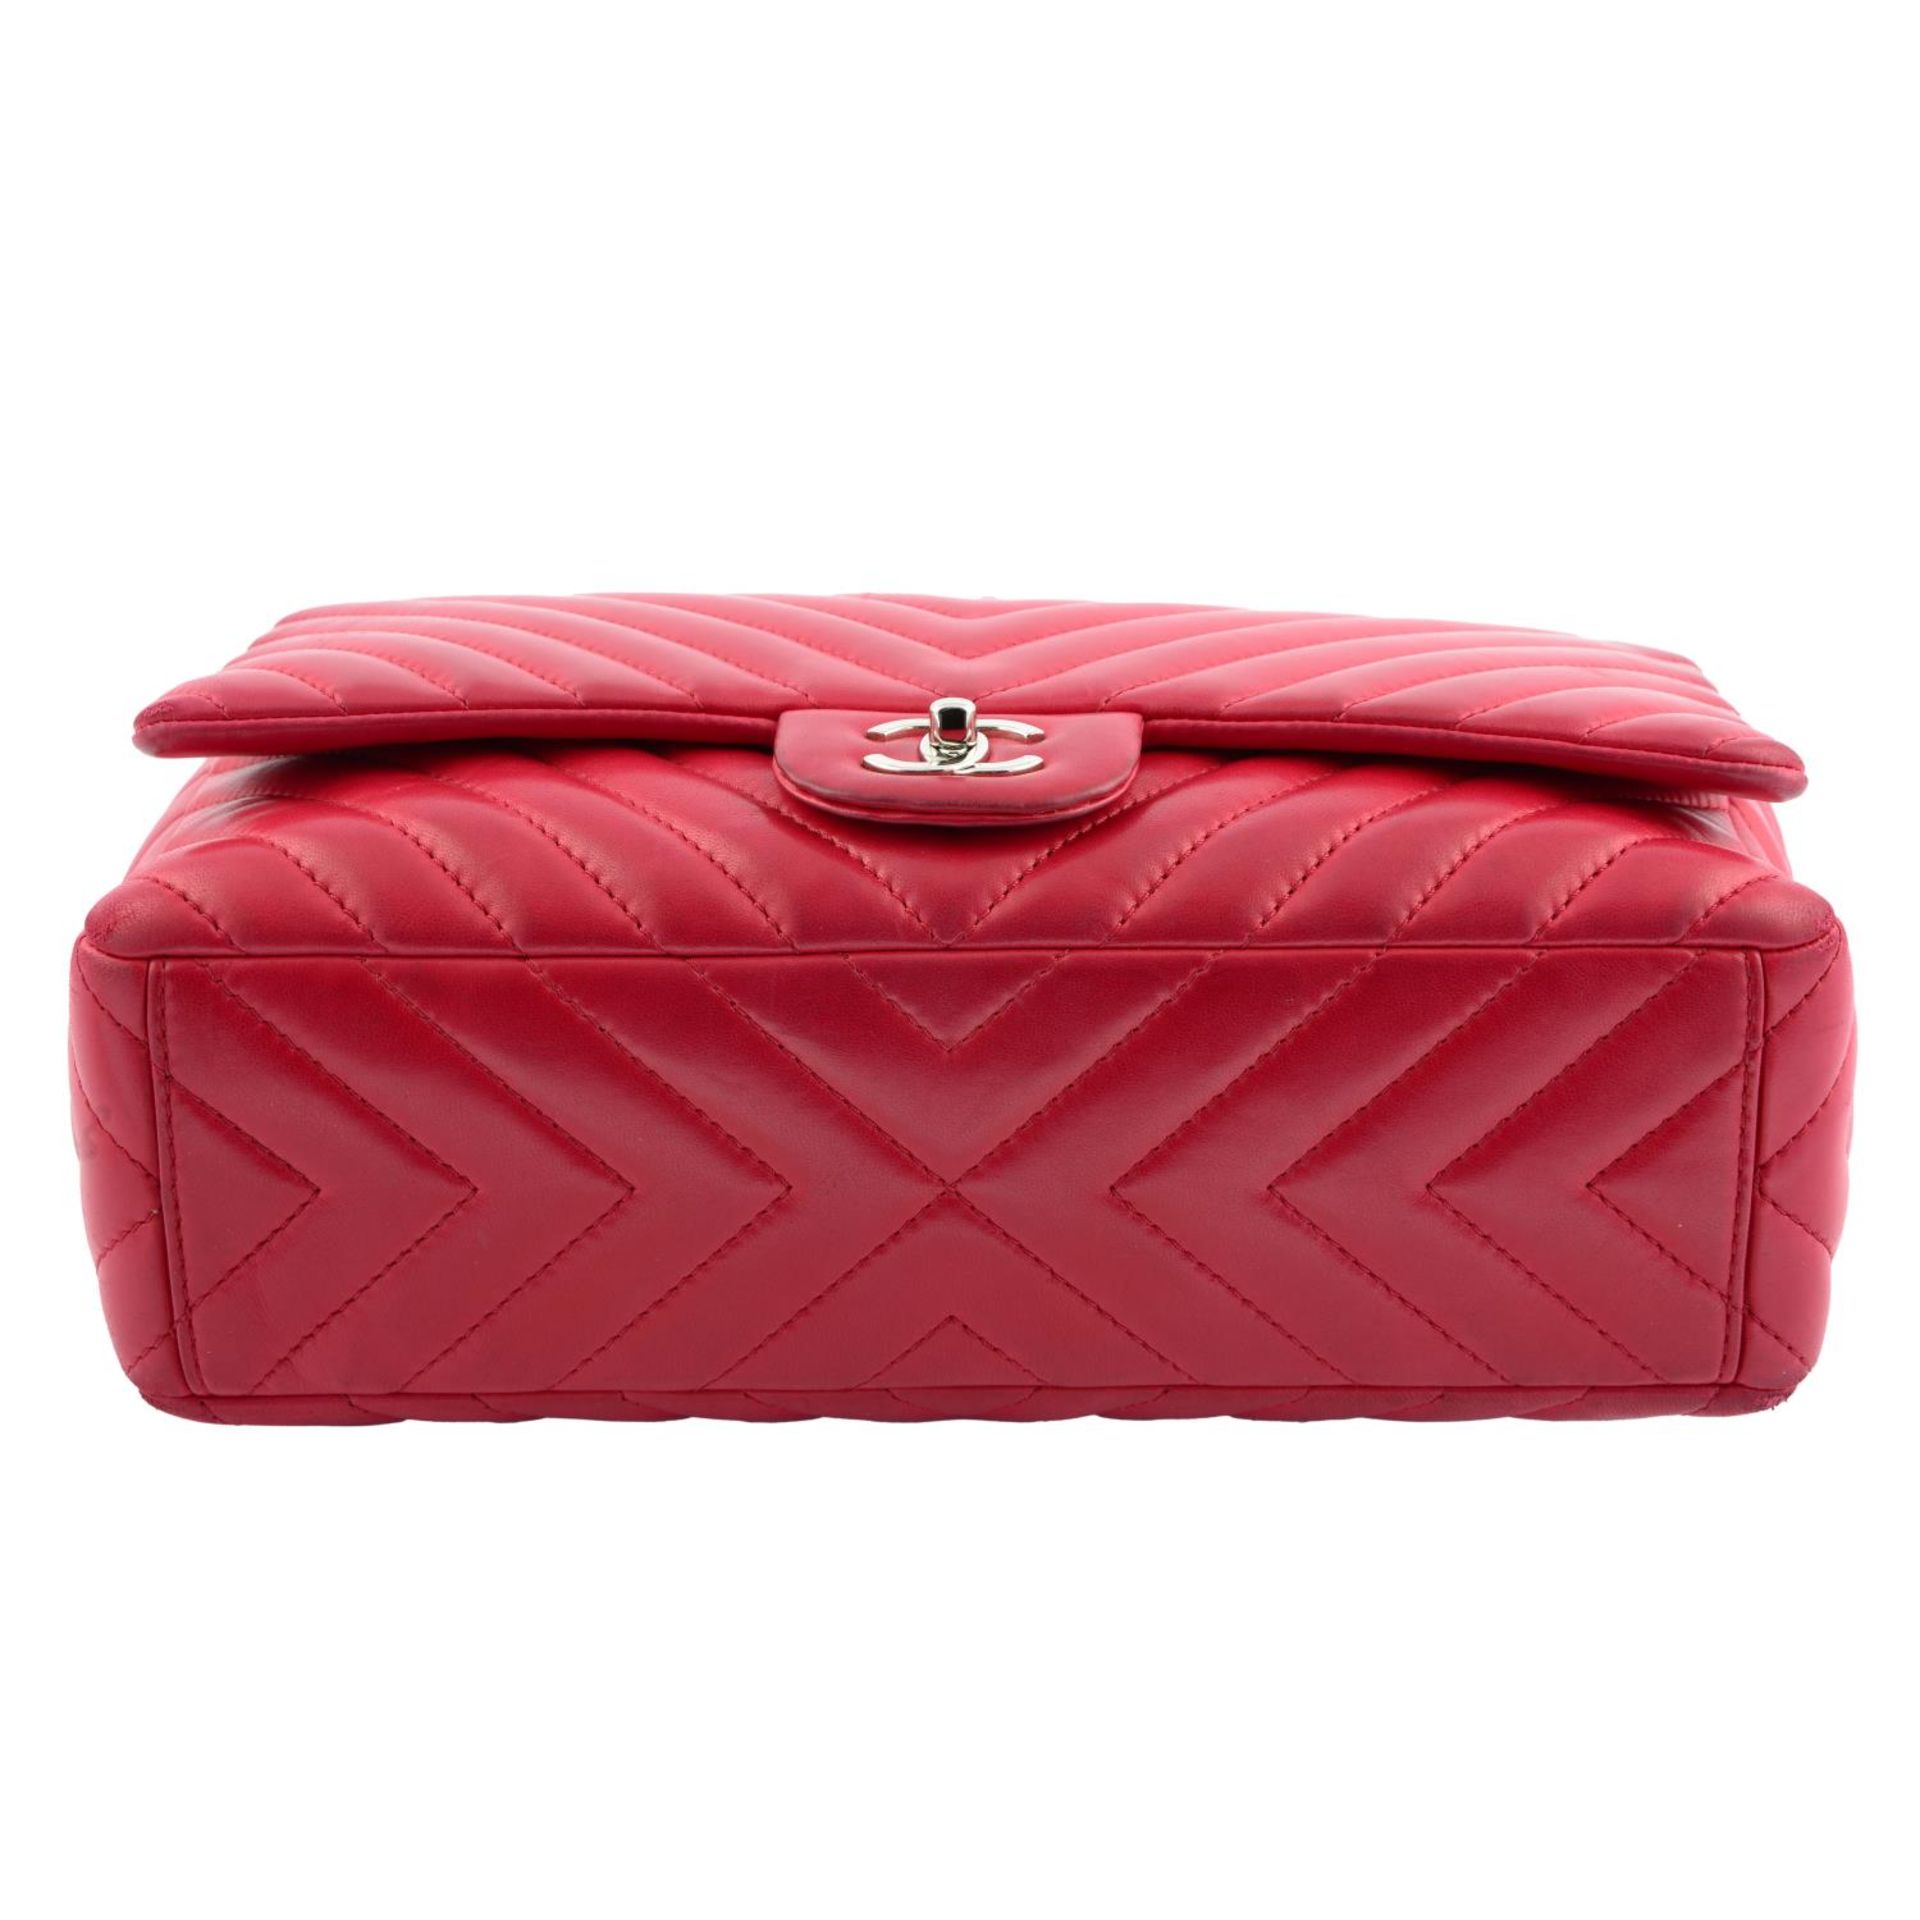 CHANEL - an amaranth red Maxi Classic Flap handbag. - Image 5 of 7